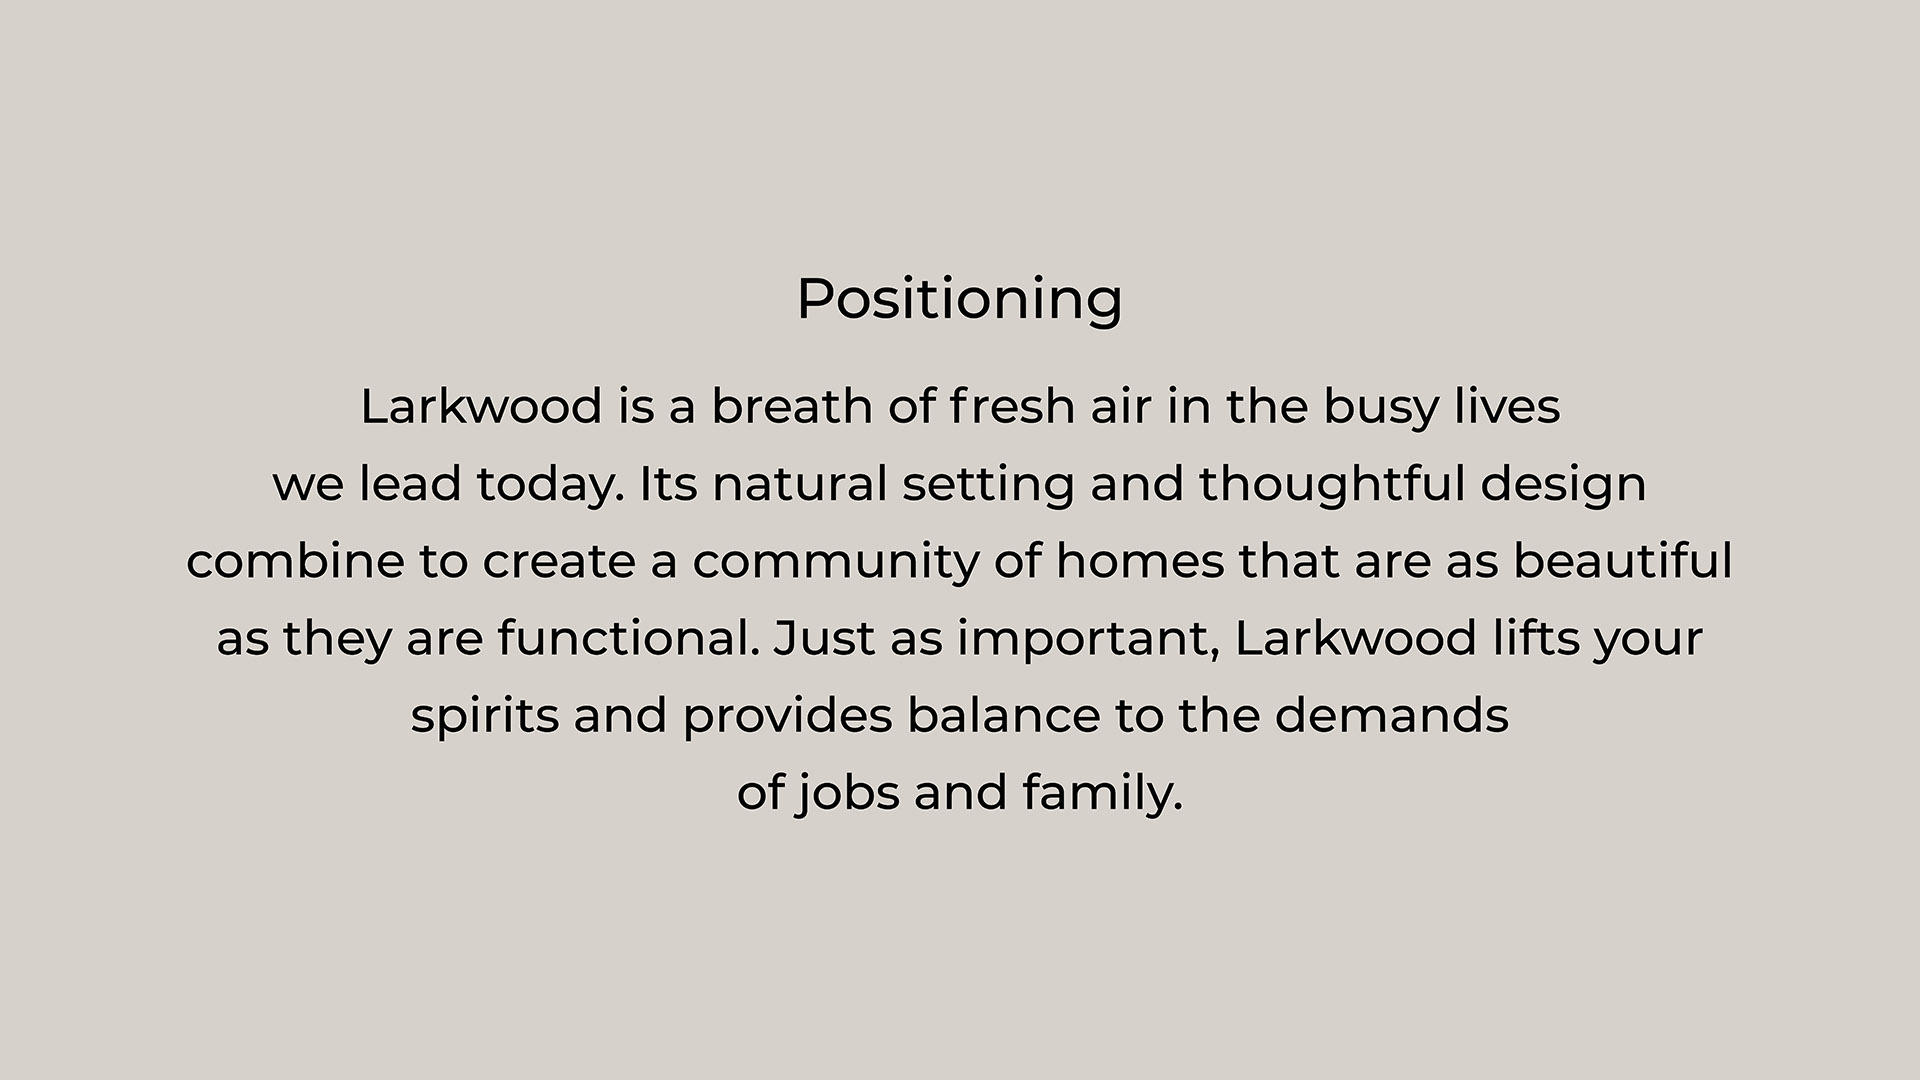 larkwood positioning statement on gray